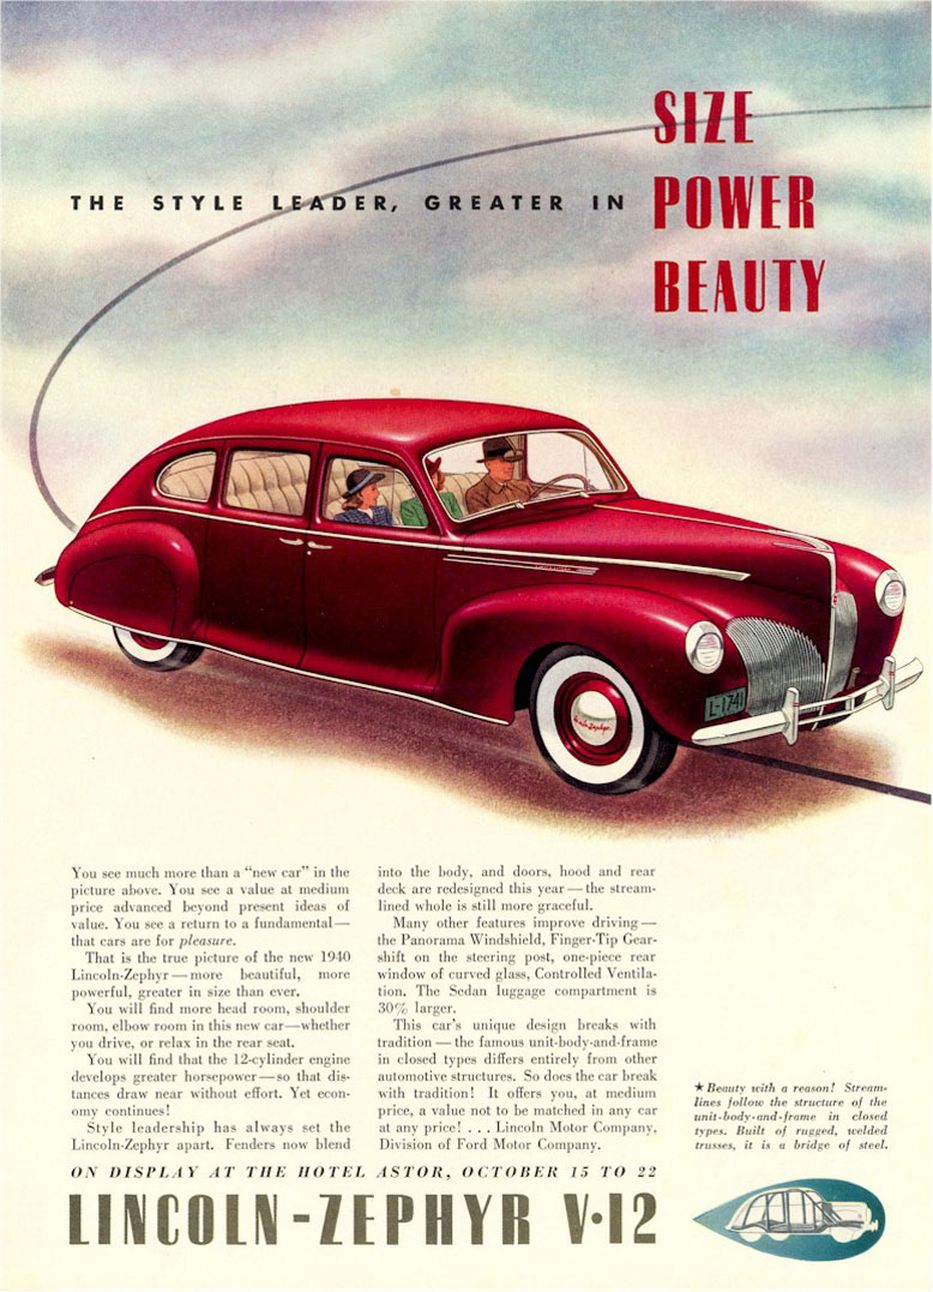 1940 Lincoln Zephyr 2